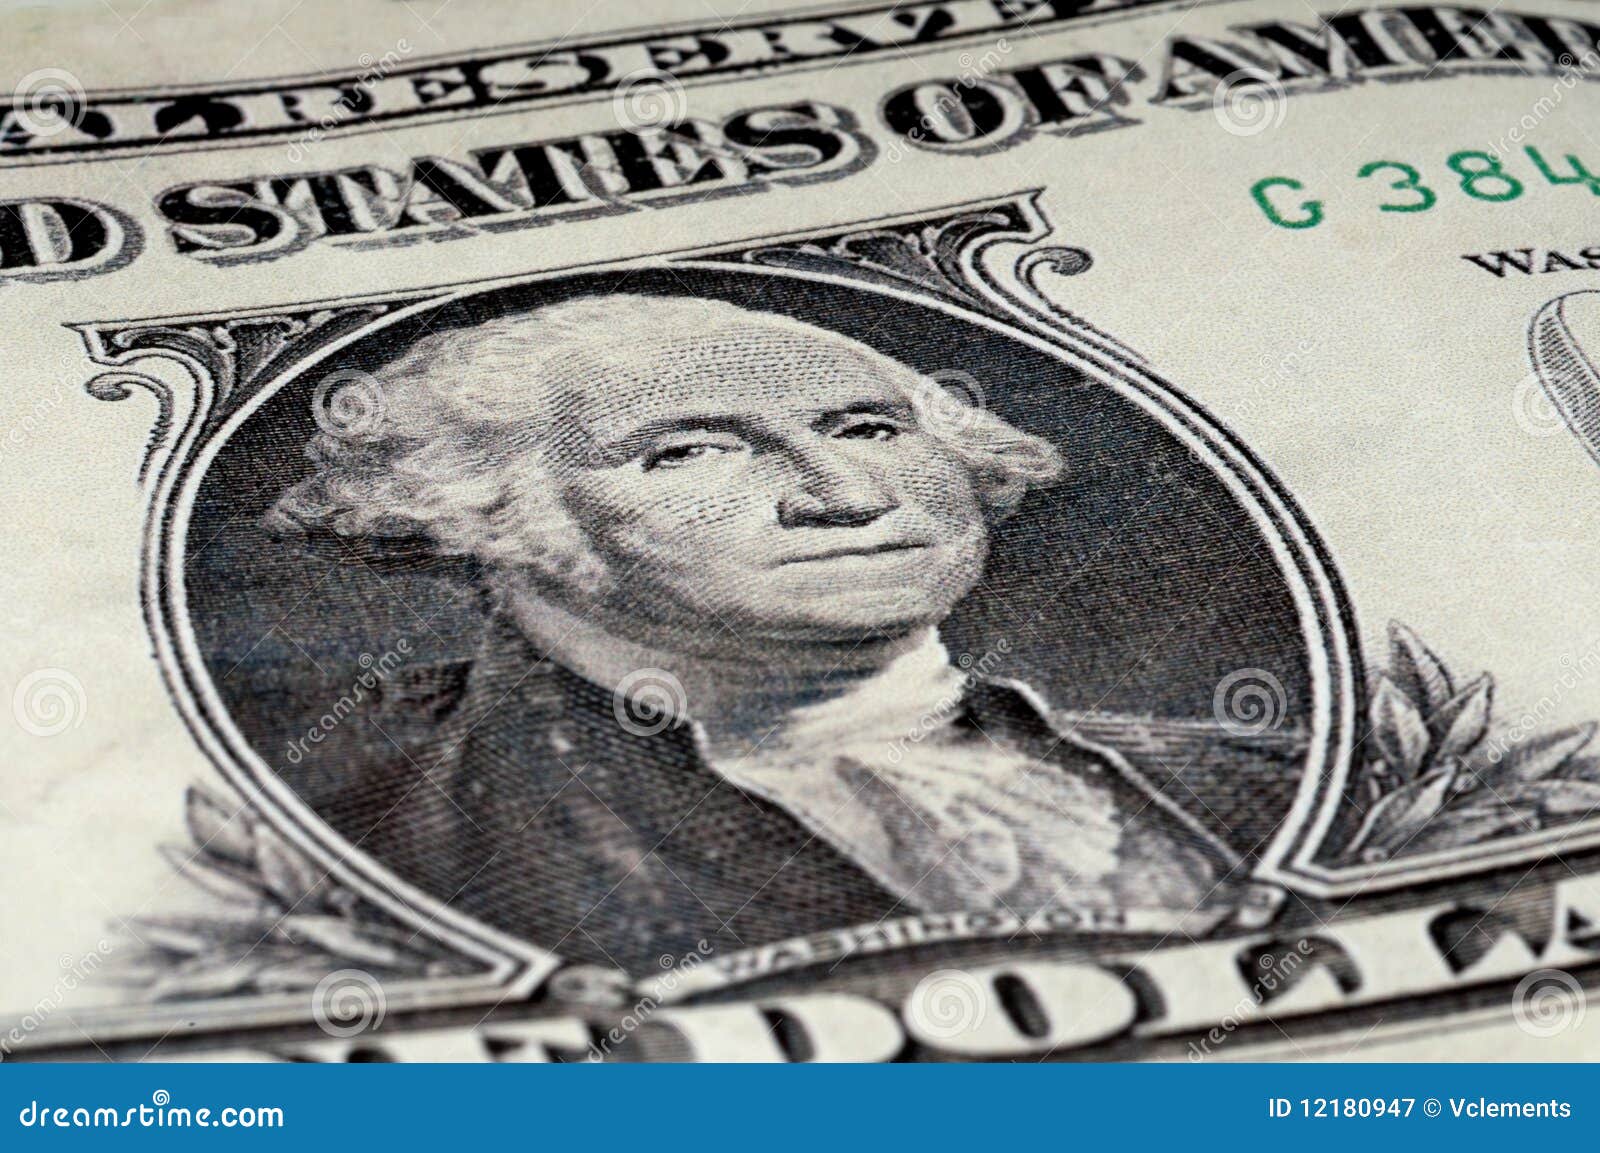 George Washington On An American 1 Dollar Bill Stock Image Image Of